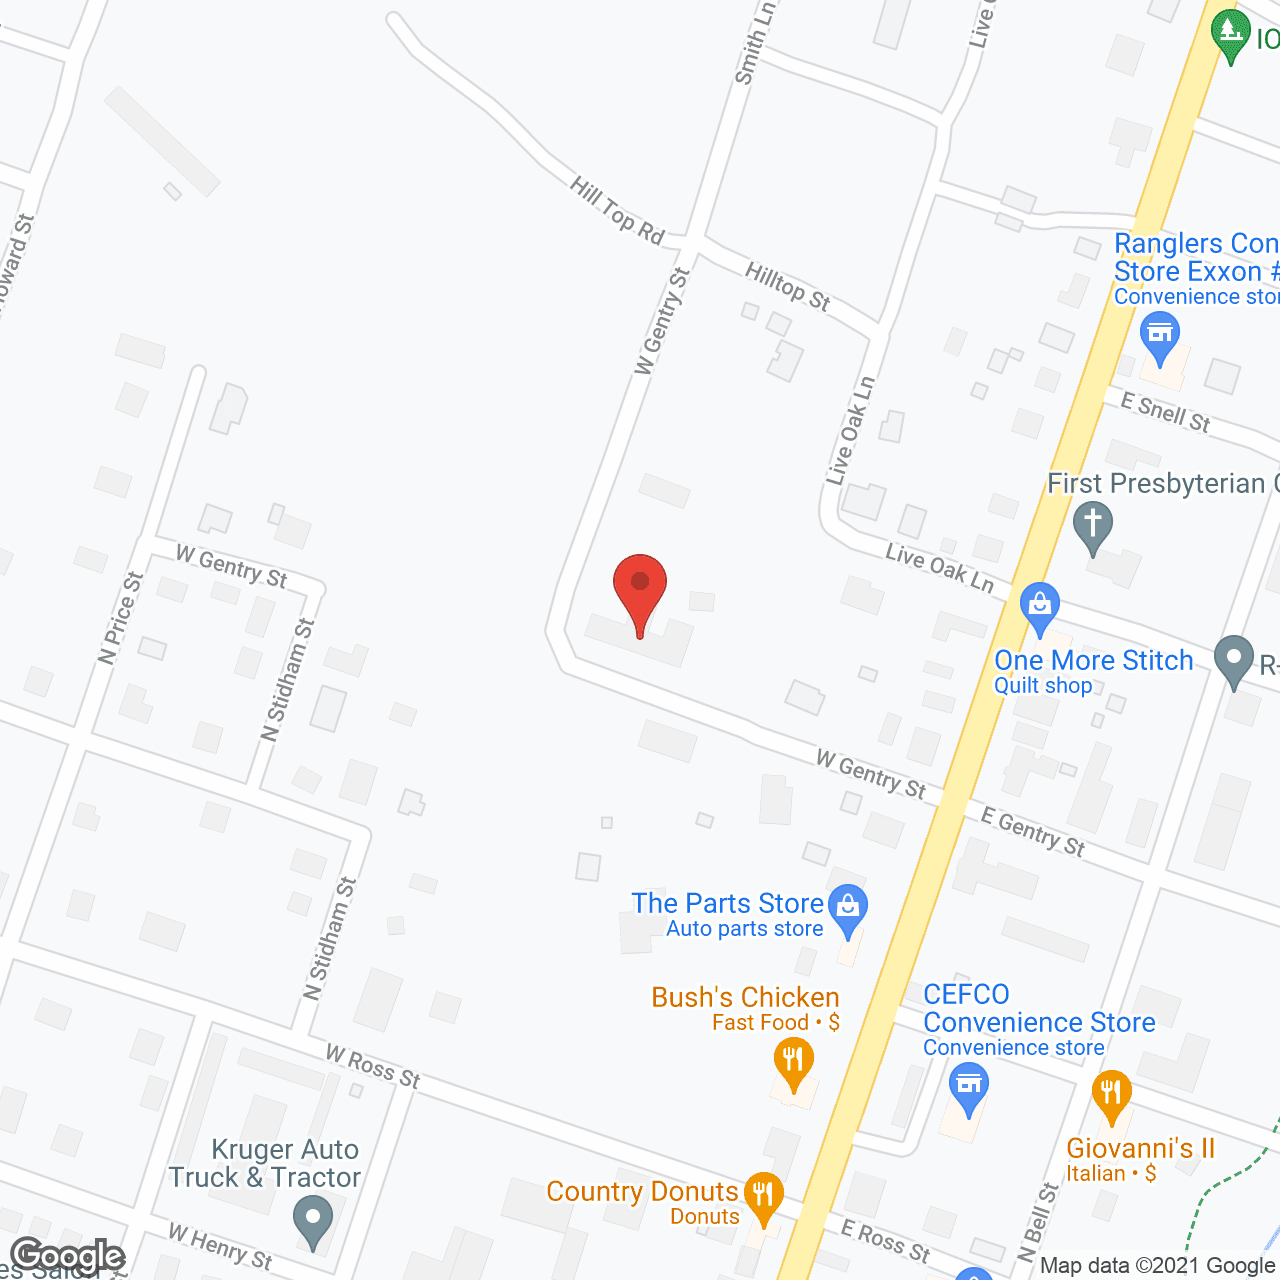 Hamilton Nursing Home in google map